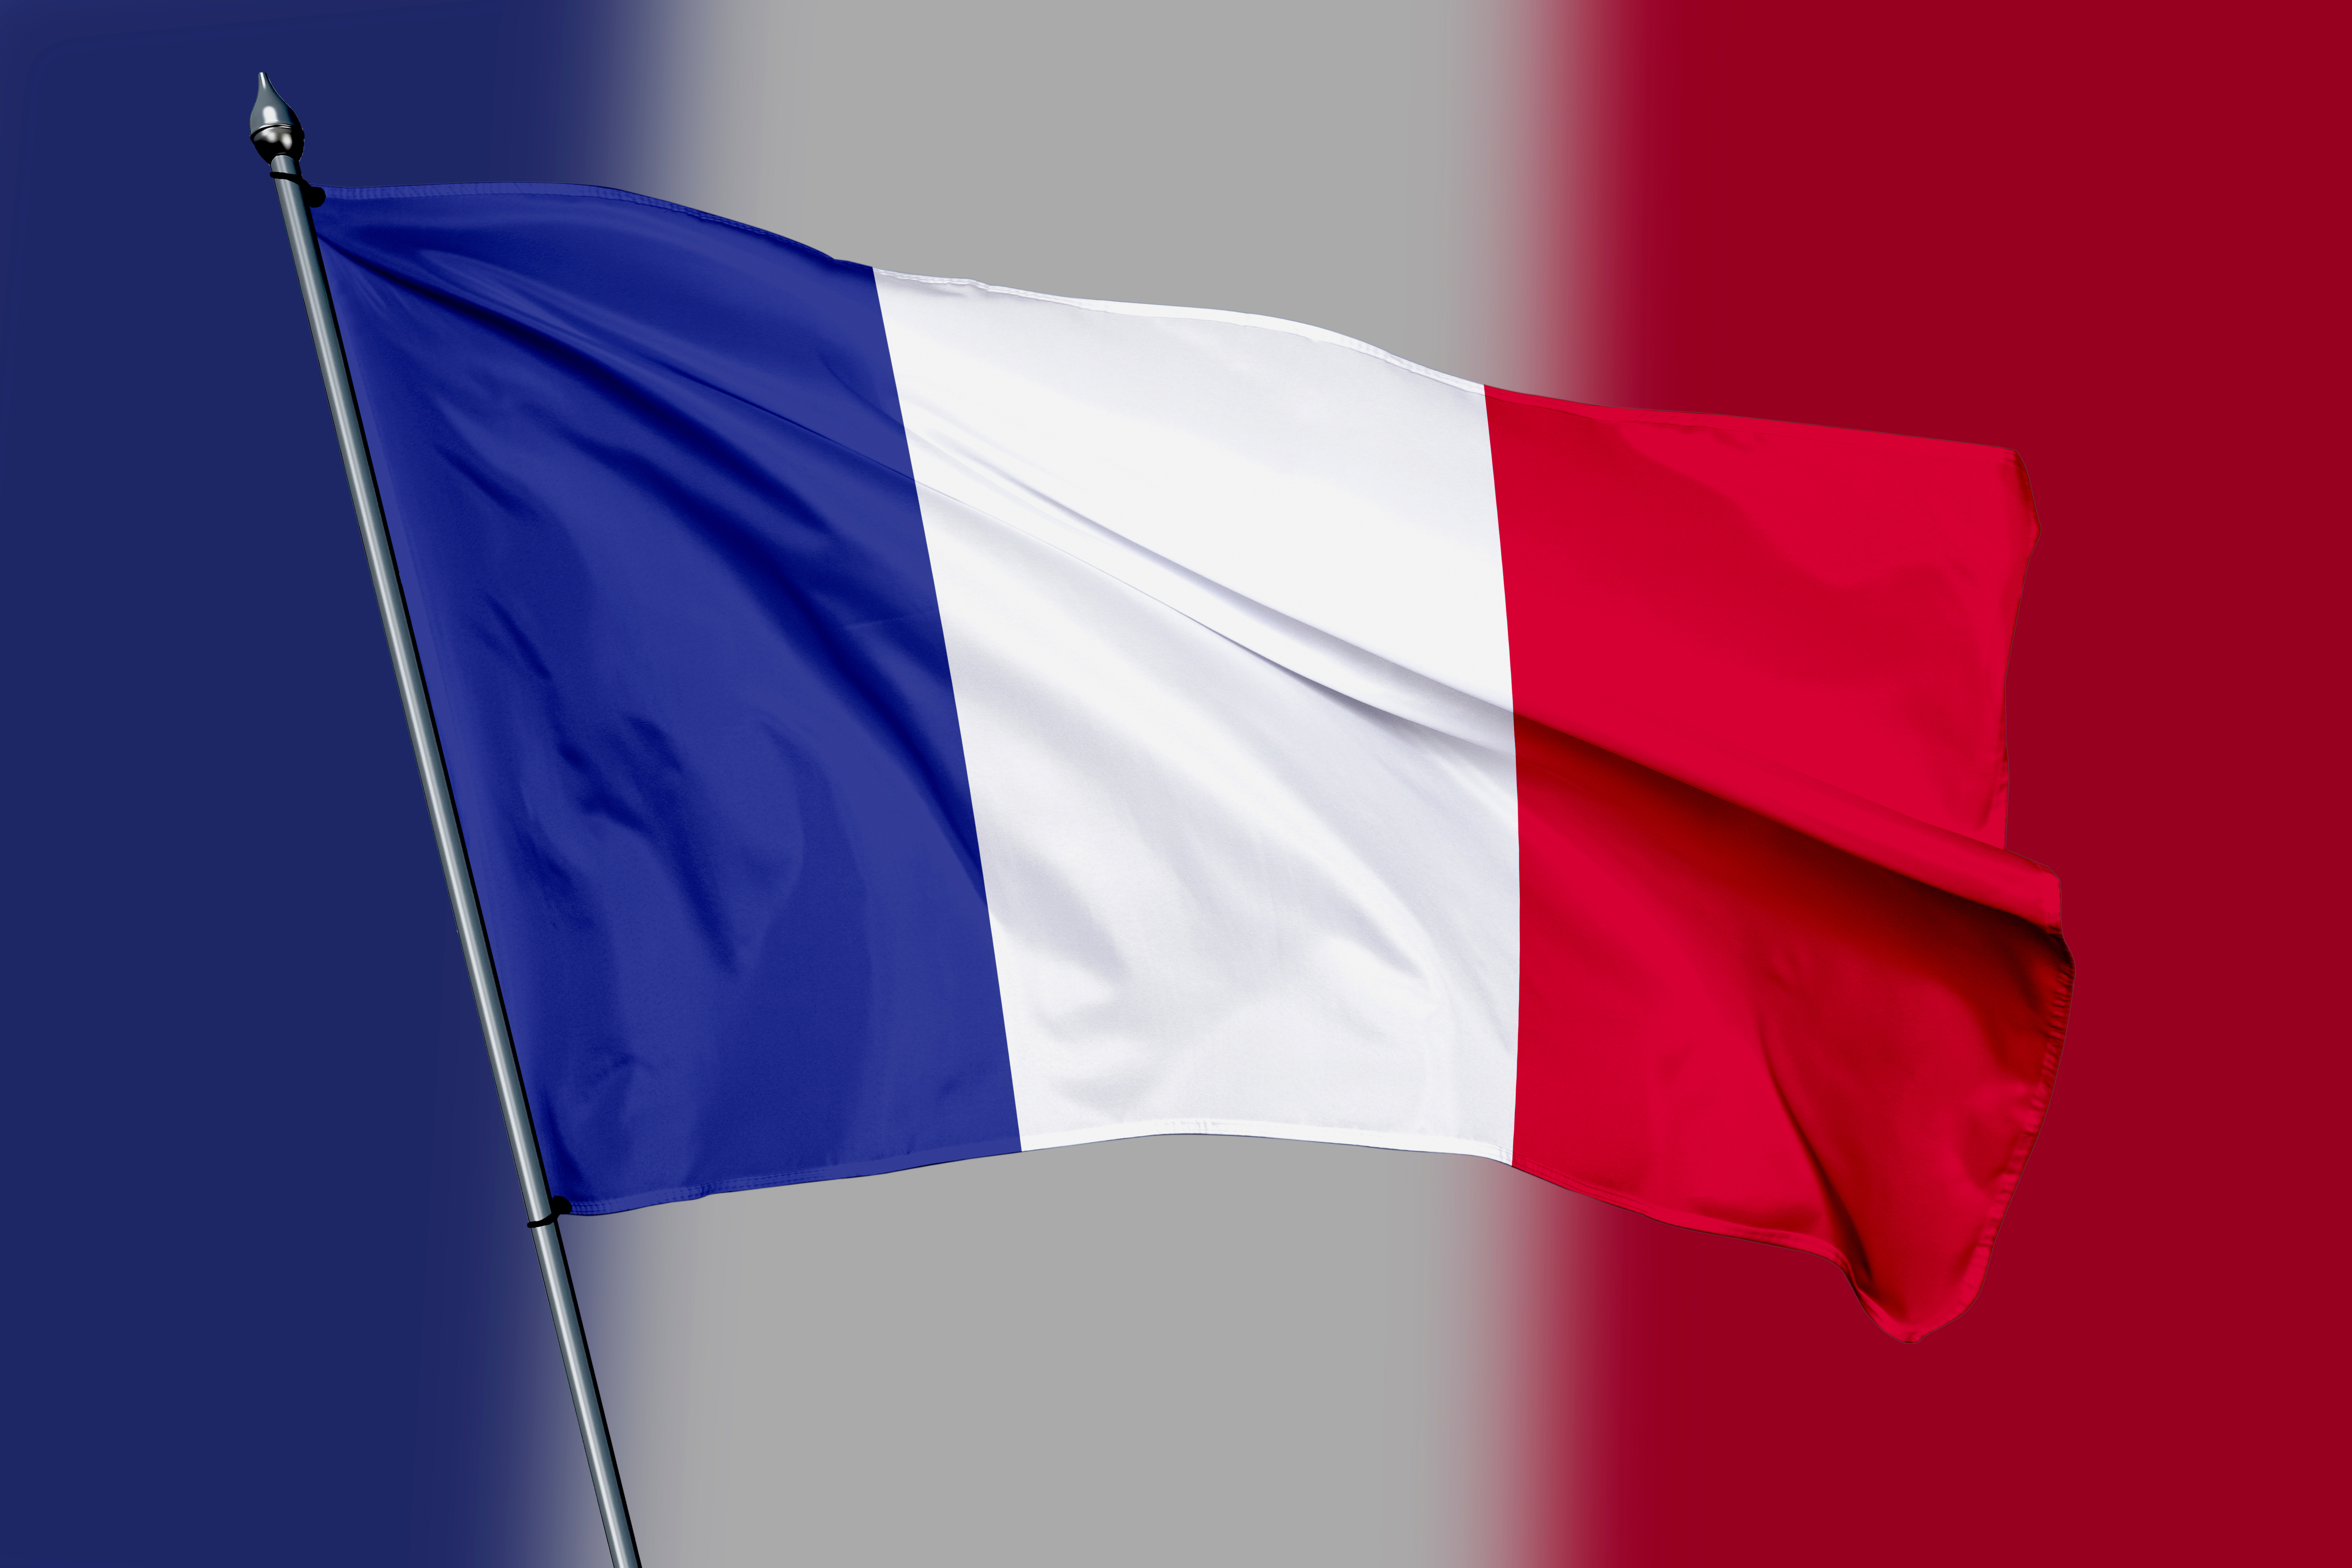 The French flag symbolizes French citizenship